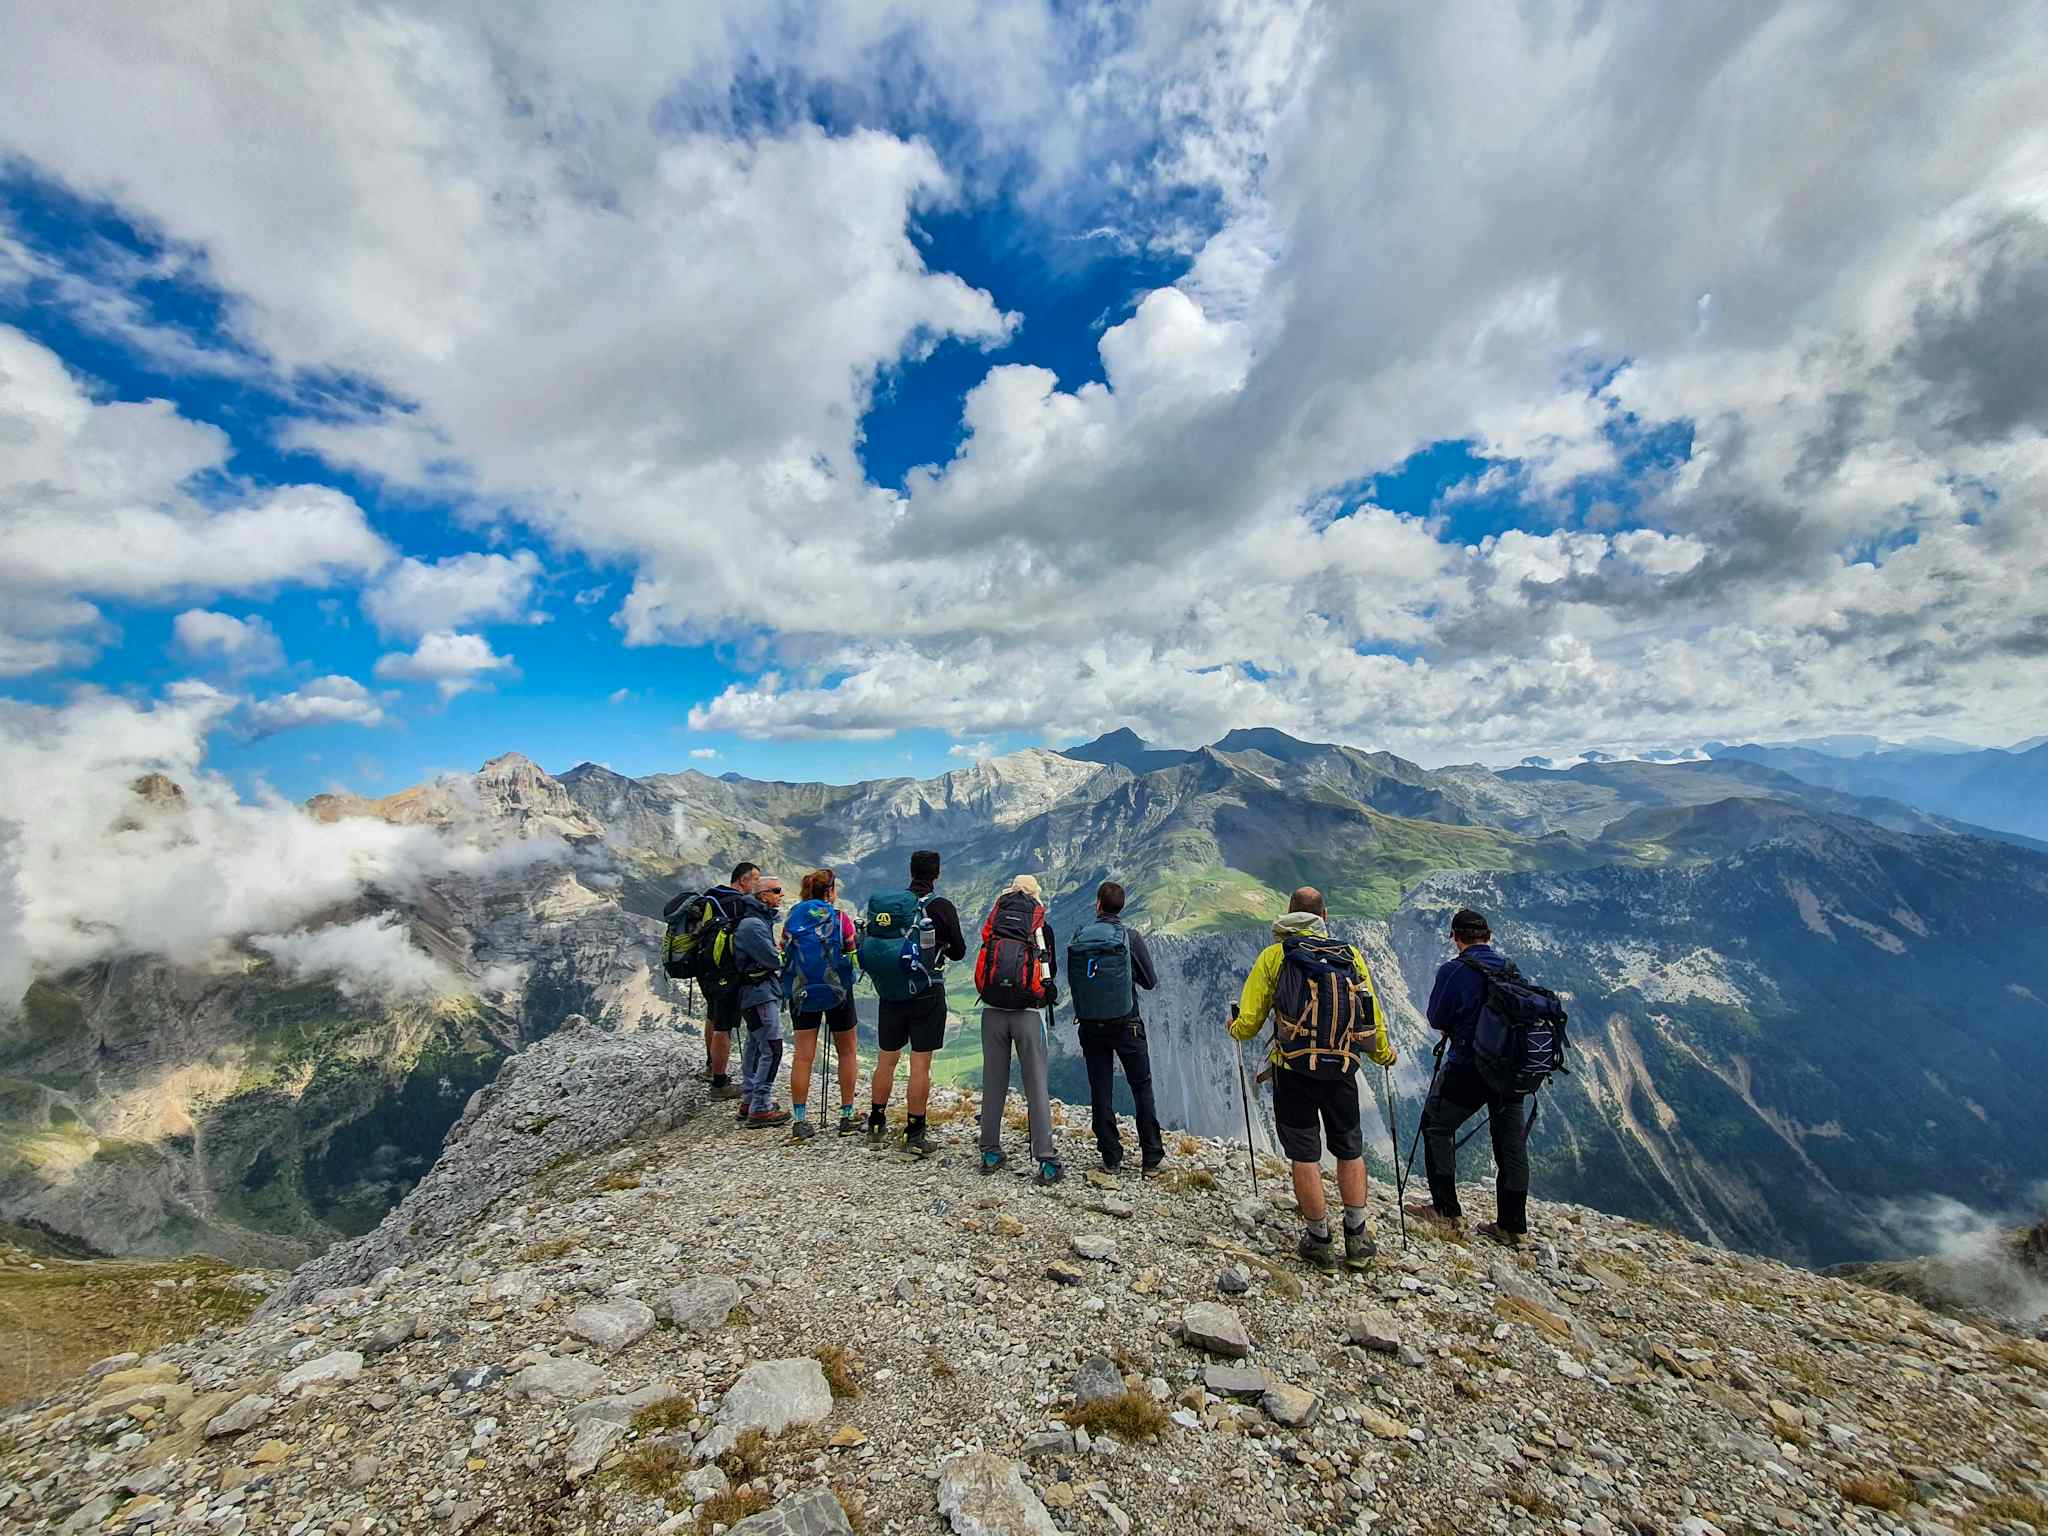 Trekkers on the Alta de los Perdidos in the Pyrenees. Photo: Host/Rumbo a Picos